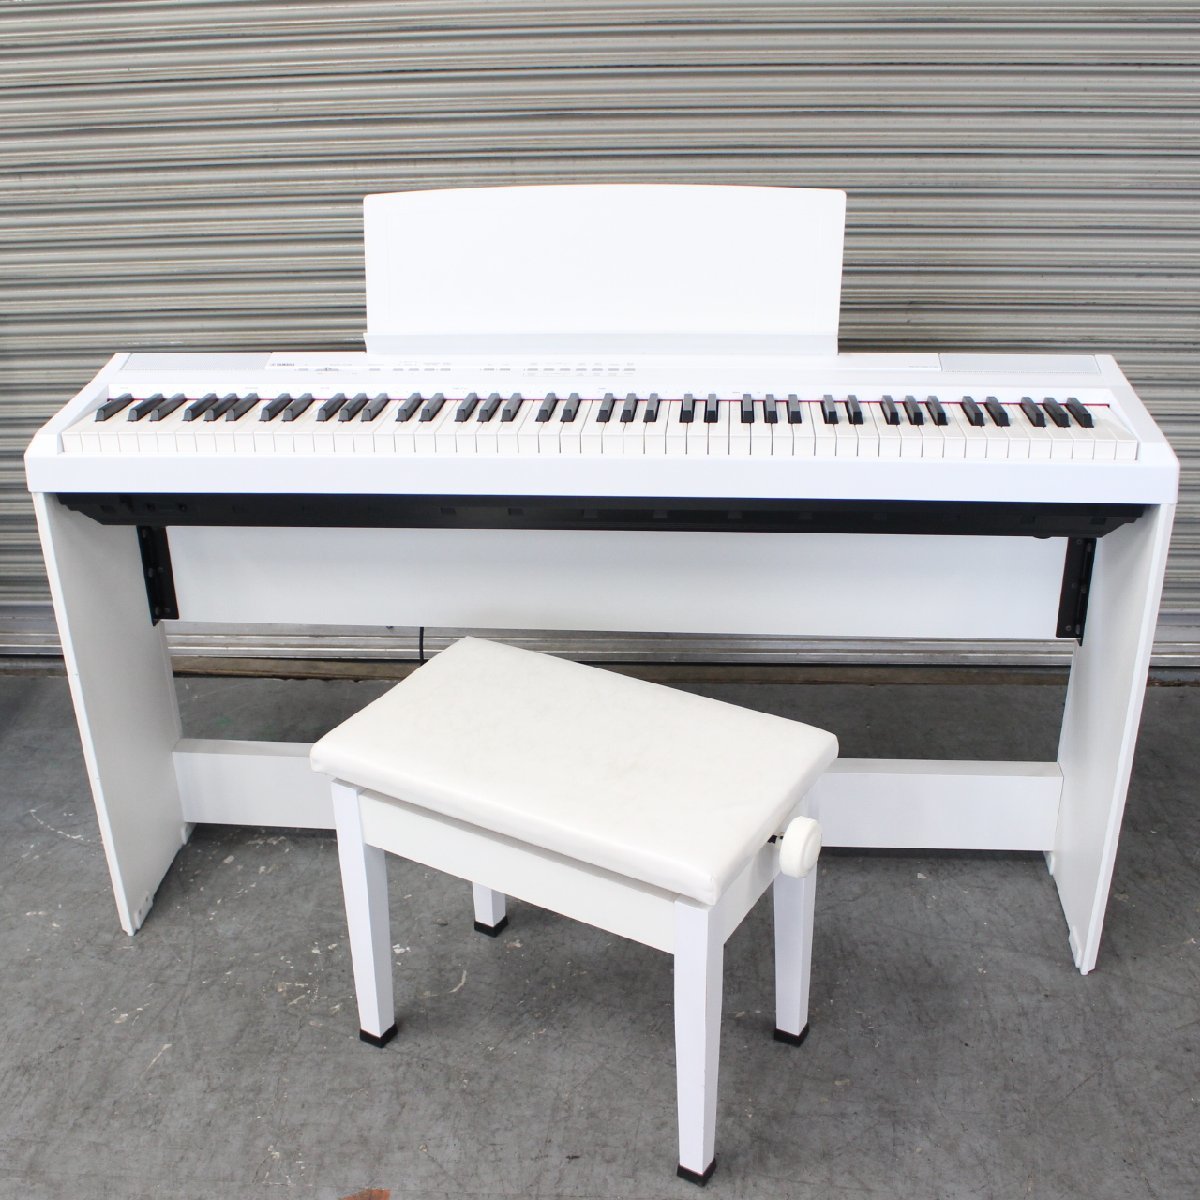 T153) 【東京・神奈川限定配送】ヤマハ電子ピアノ2014年製P-105 88鍵